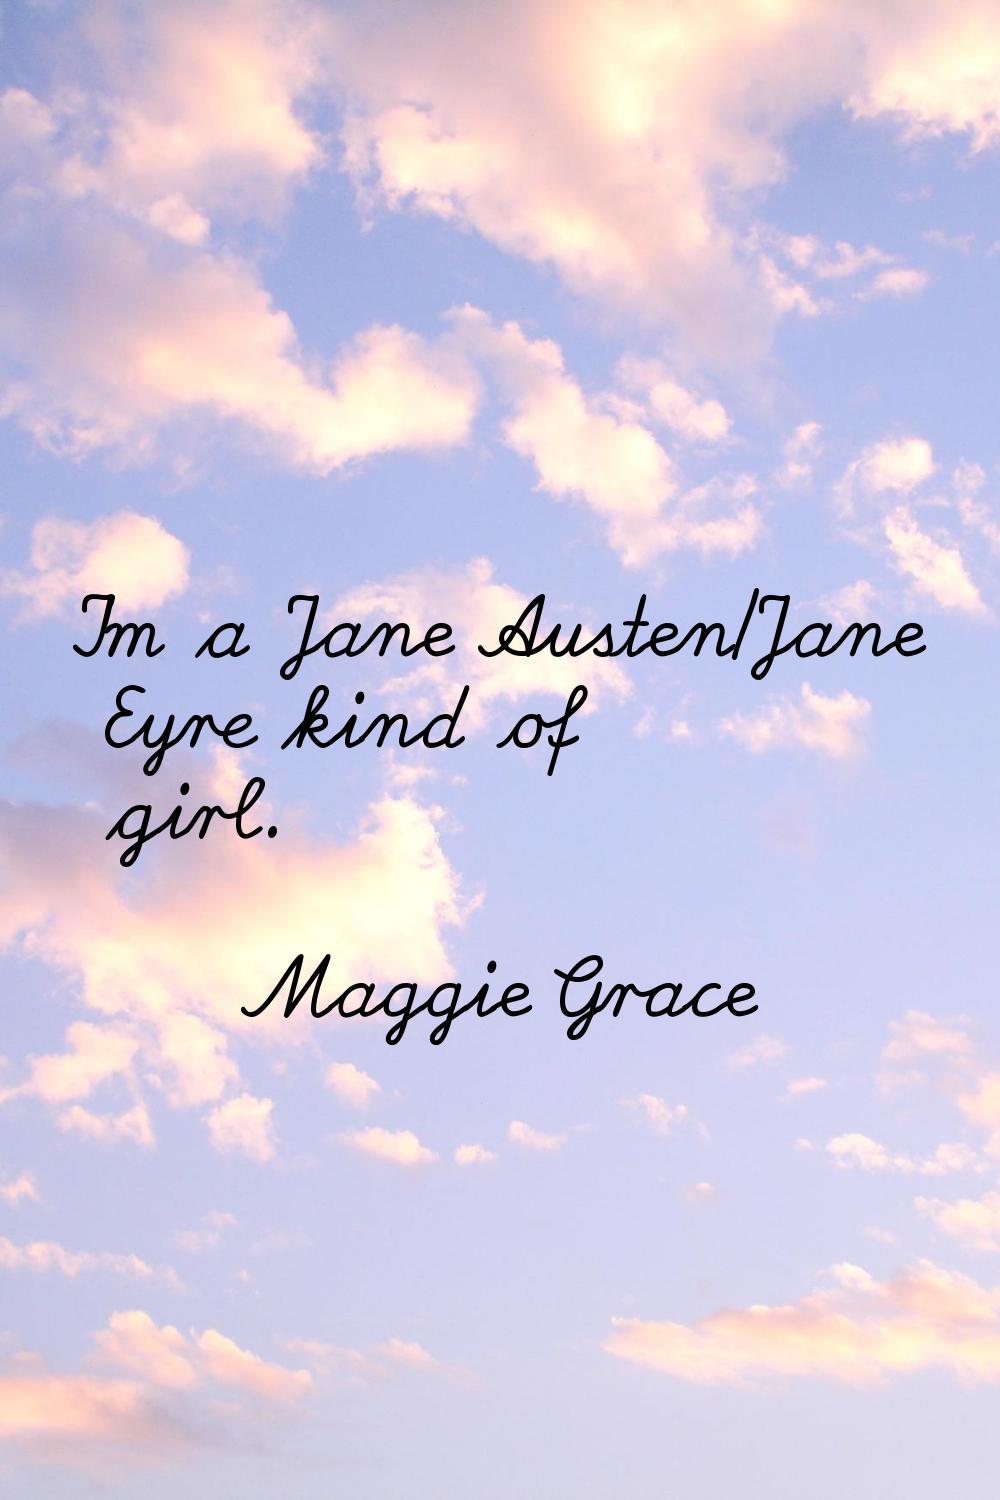 I'm a Jane Austen/Jane Eyre kind of girl.